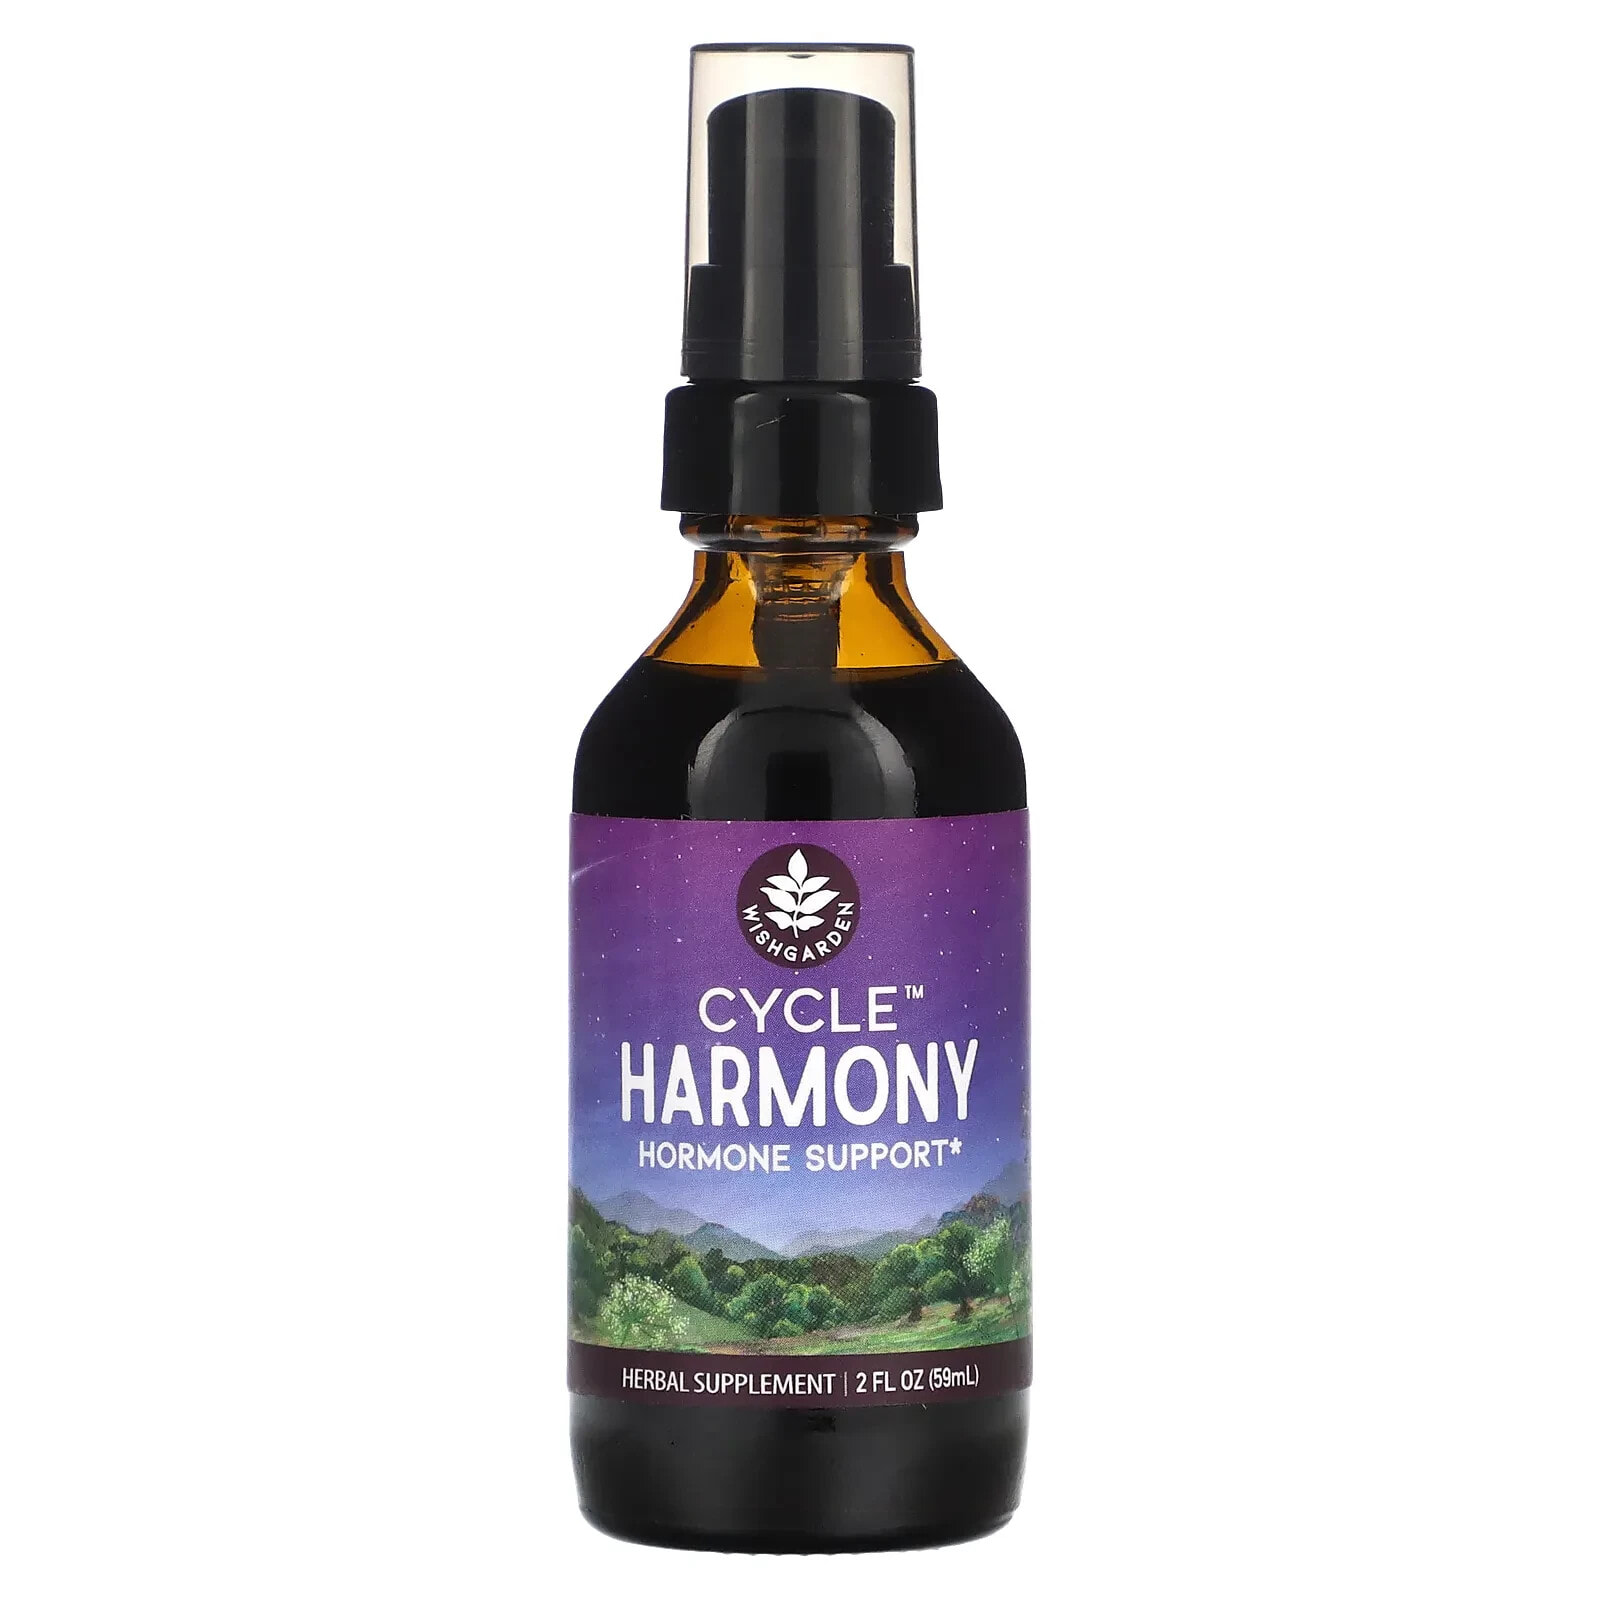 Cycle Harmony Hormone Support, 2 fl oz (59 ml)